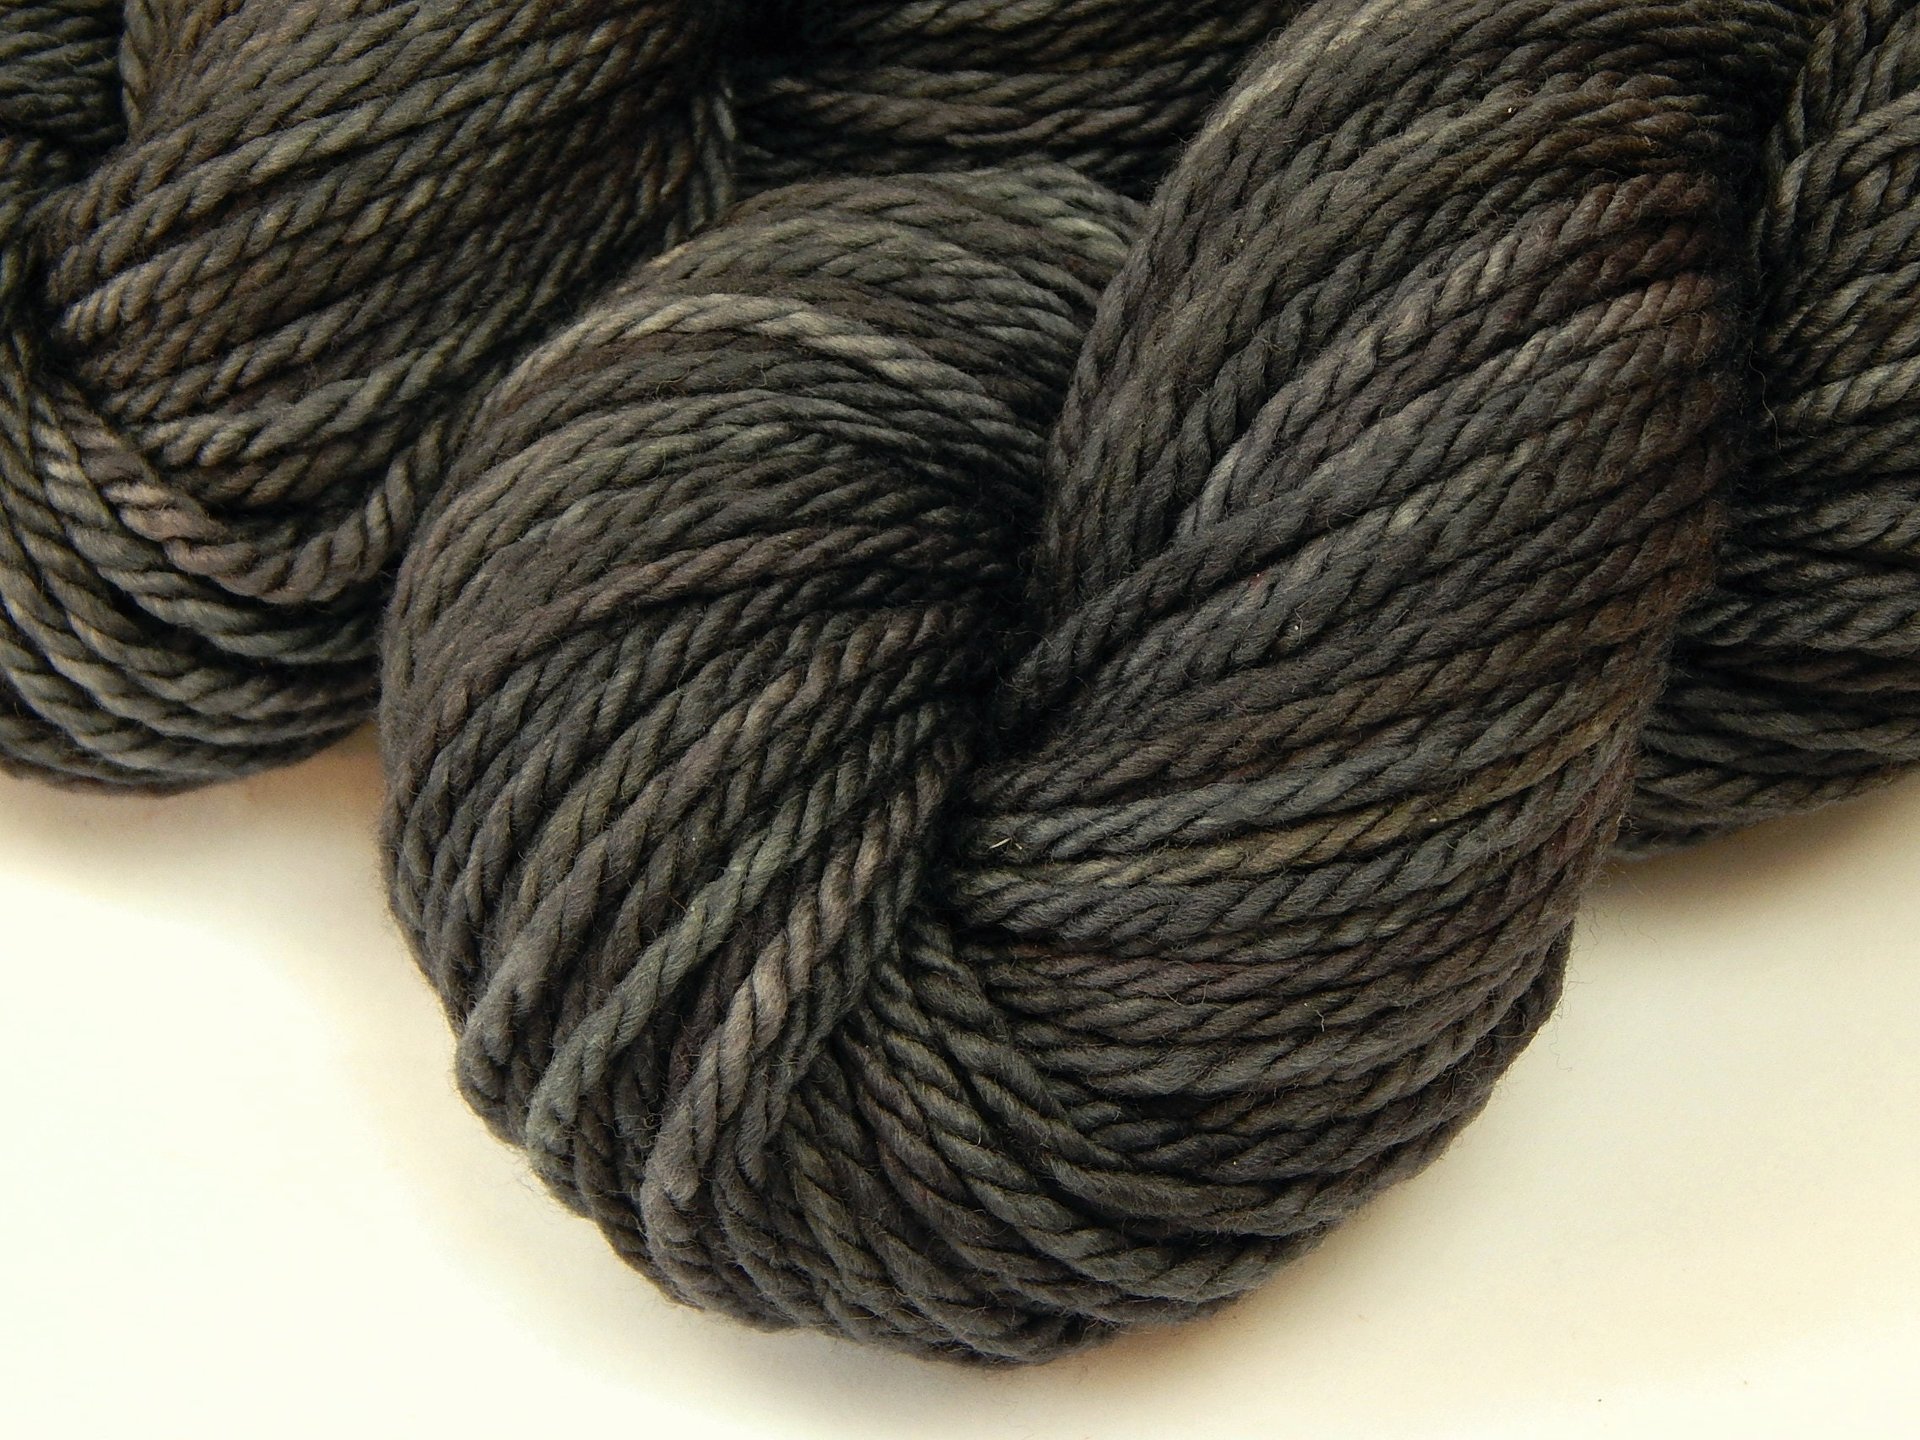 Hand Dyed Yarn, Bulky Weight Superwash Merino Wool - Slate Grey Tonal - Thick Chunky Dark Grey Knitting Yarn, Charcoal Gray Bulky Yarn